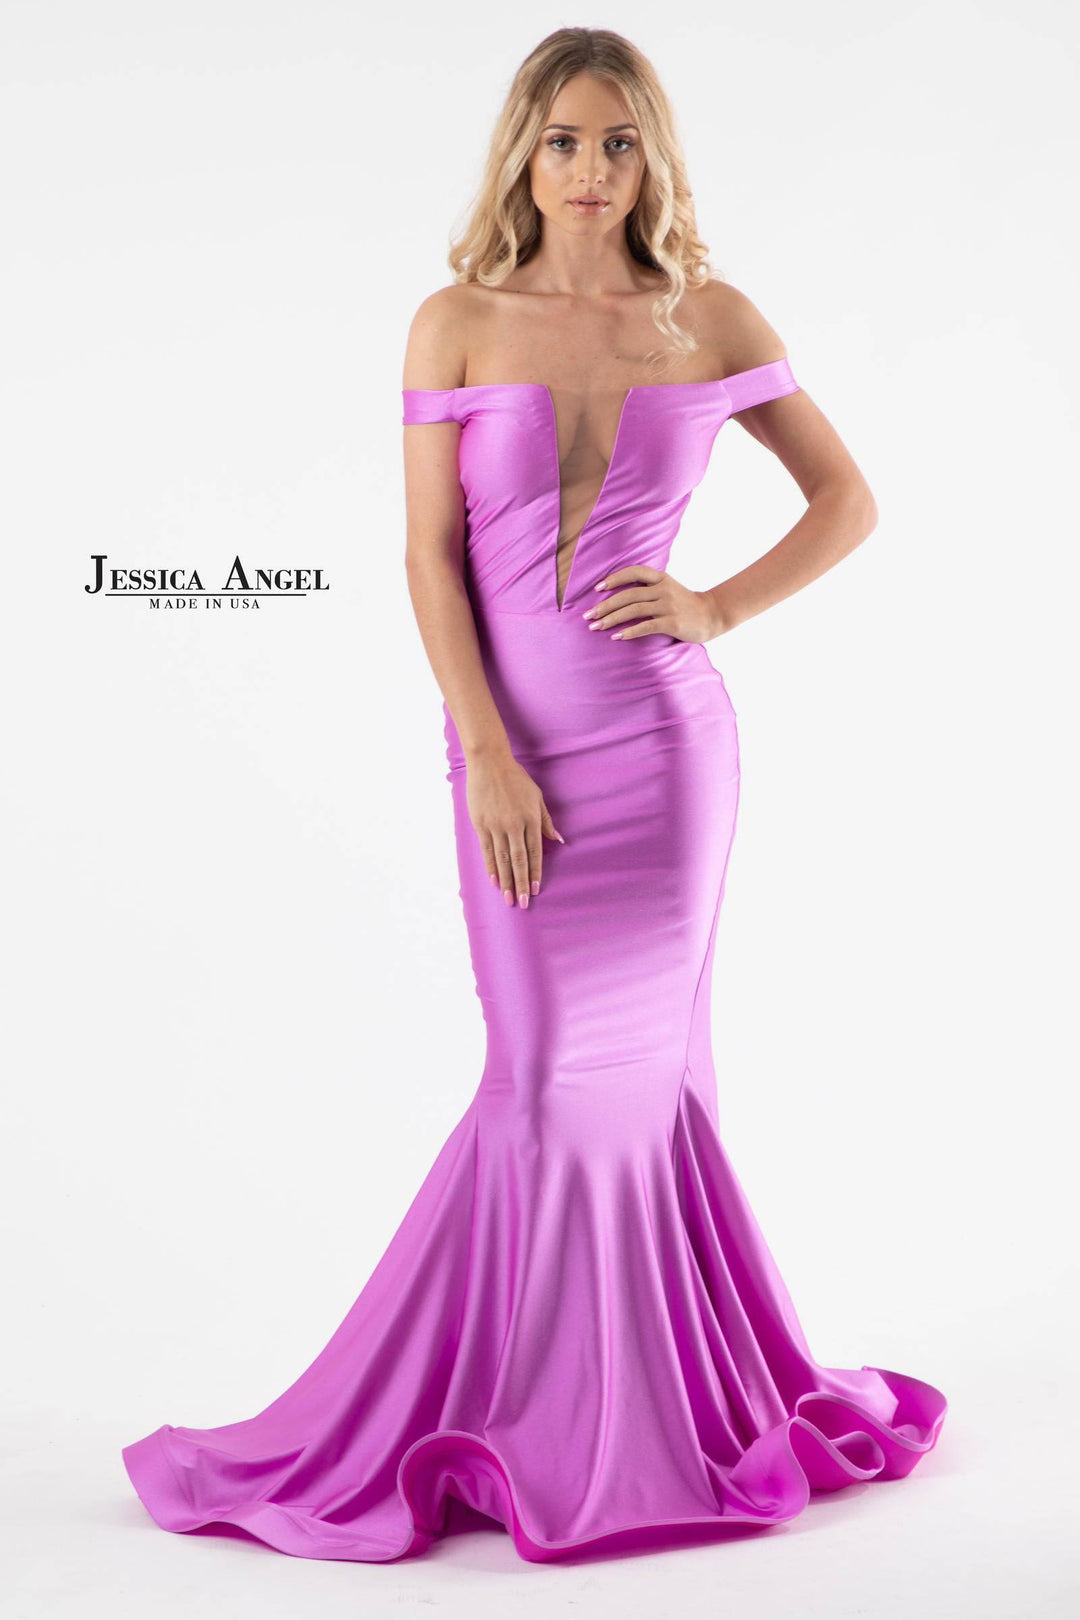 Jessica Angel 518 - B Chic Fashions